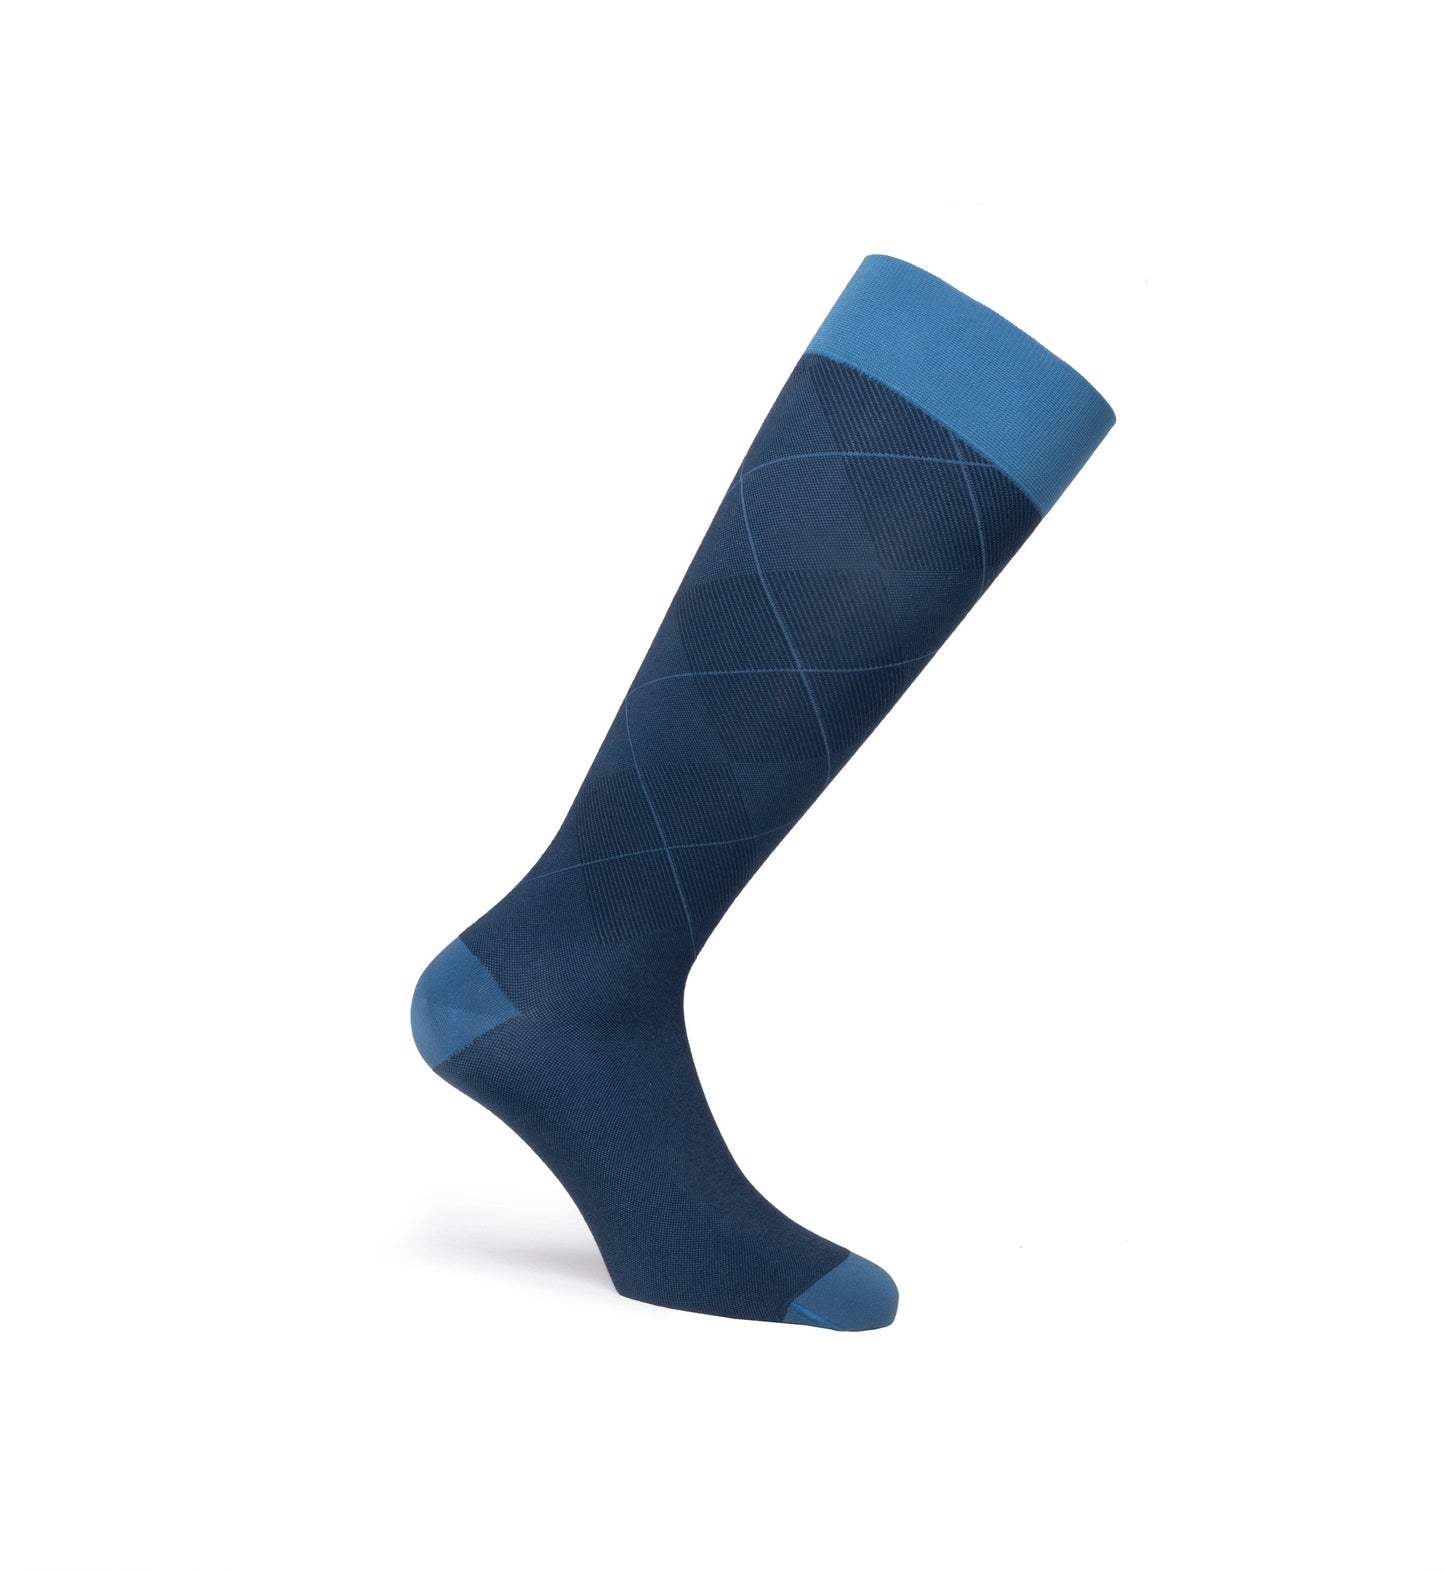 JOBST Casual Pattern Compression Socks 15-20 mmHg, Knee High, Closed Toe Full Calf Petite